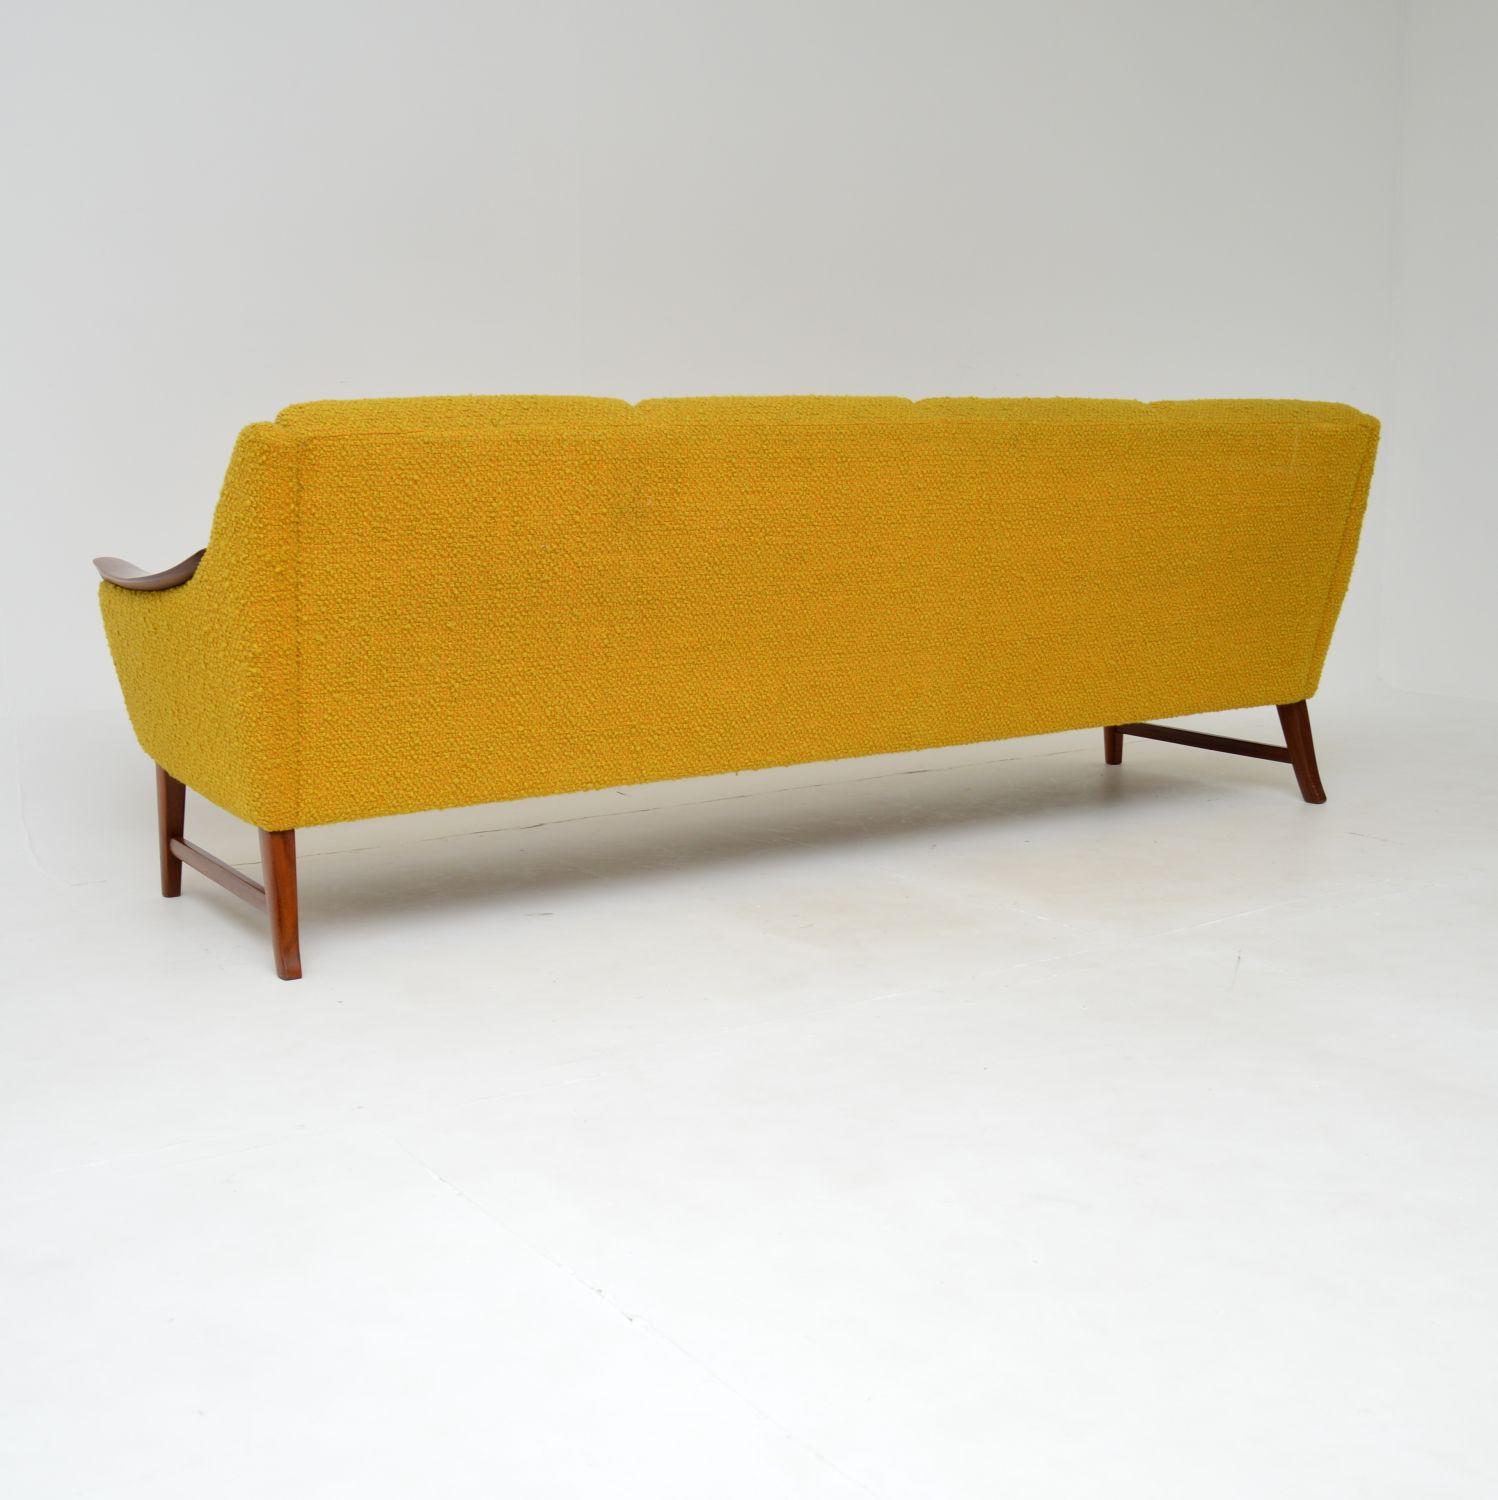 Bouclé 1960's Norwegian Vintage Teak Sofa in Mustard Yellow Boucle